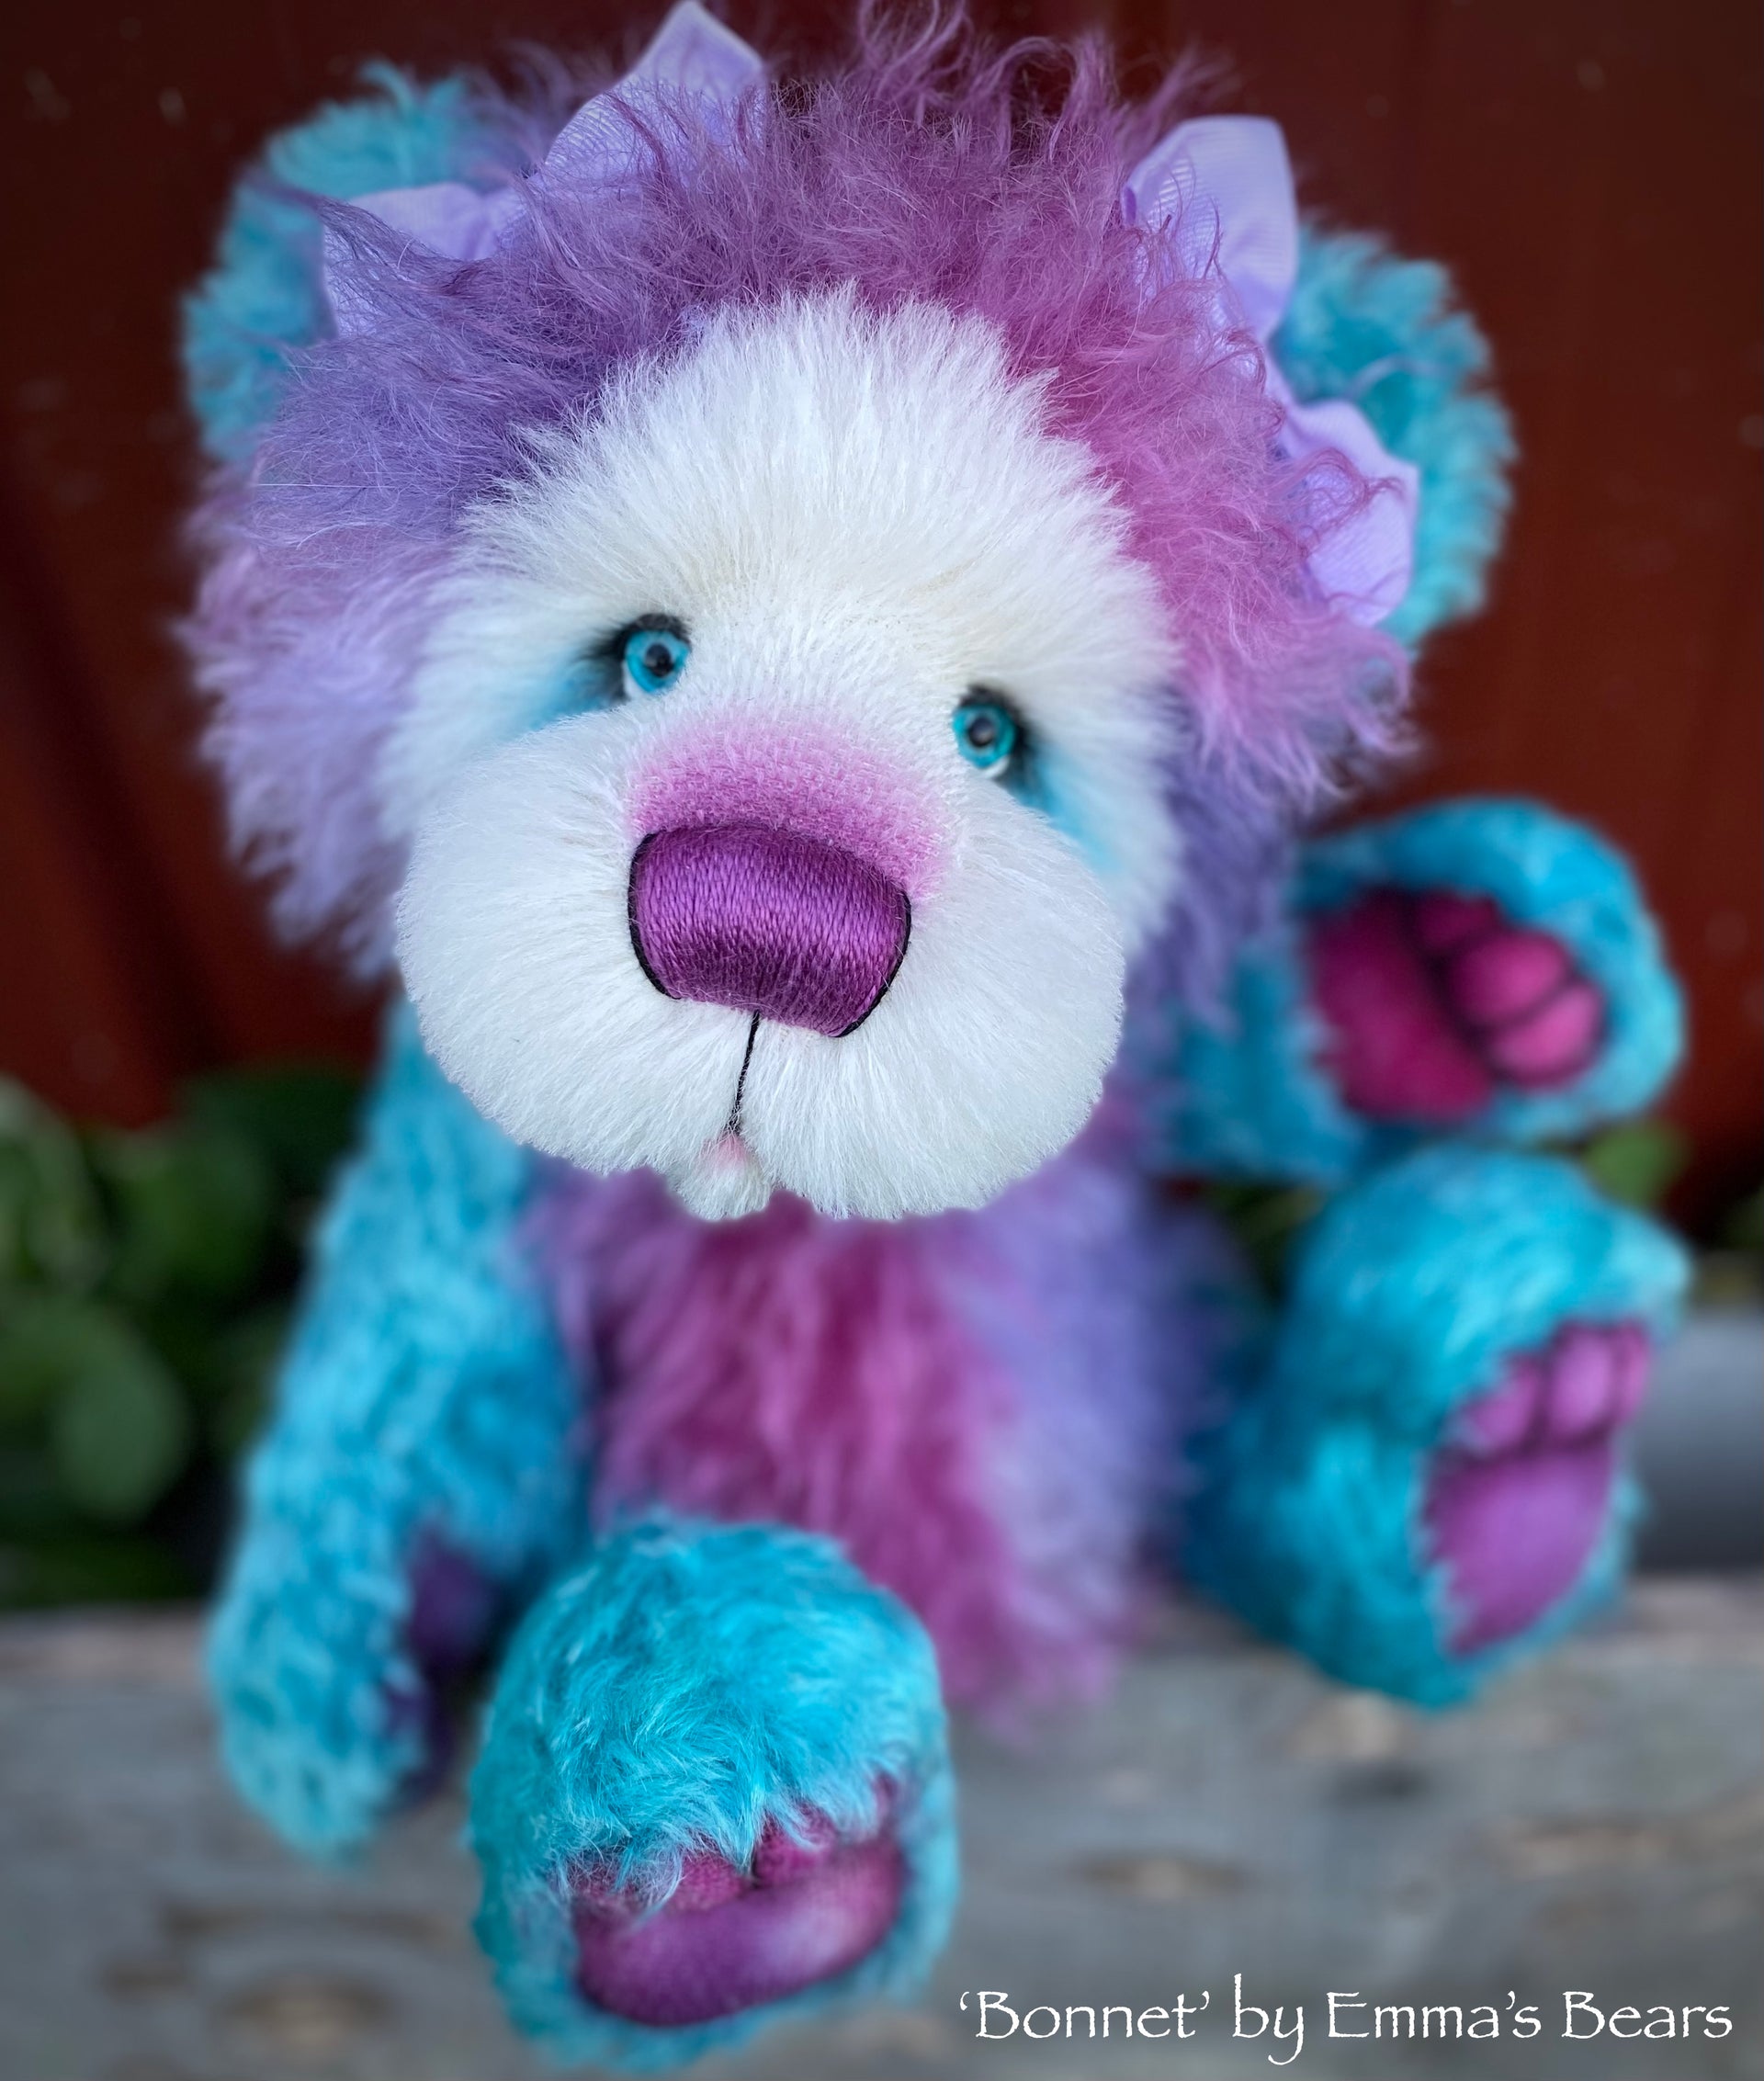 Bonnet - 15" Hand-Dyed Curlylocks Mohair Artist Bear by Emma's Bears - OOAK